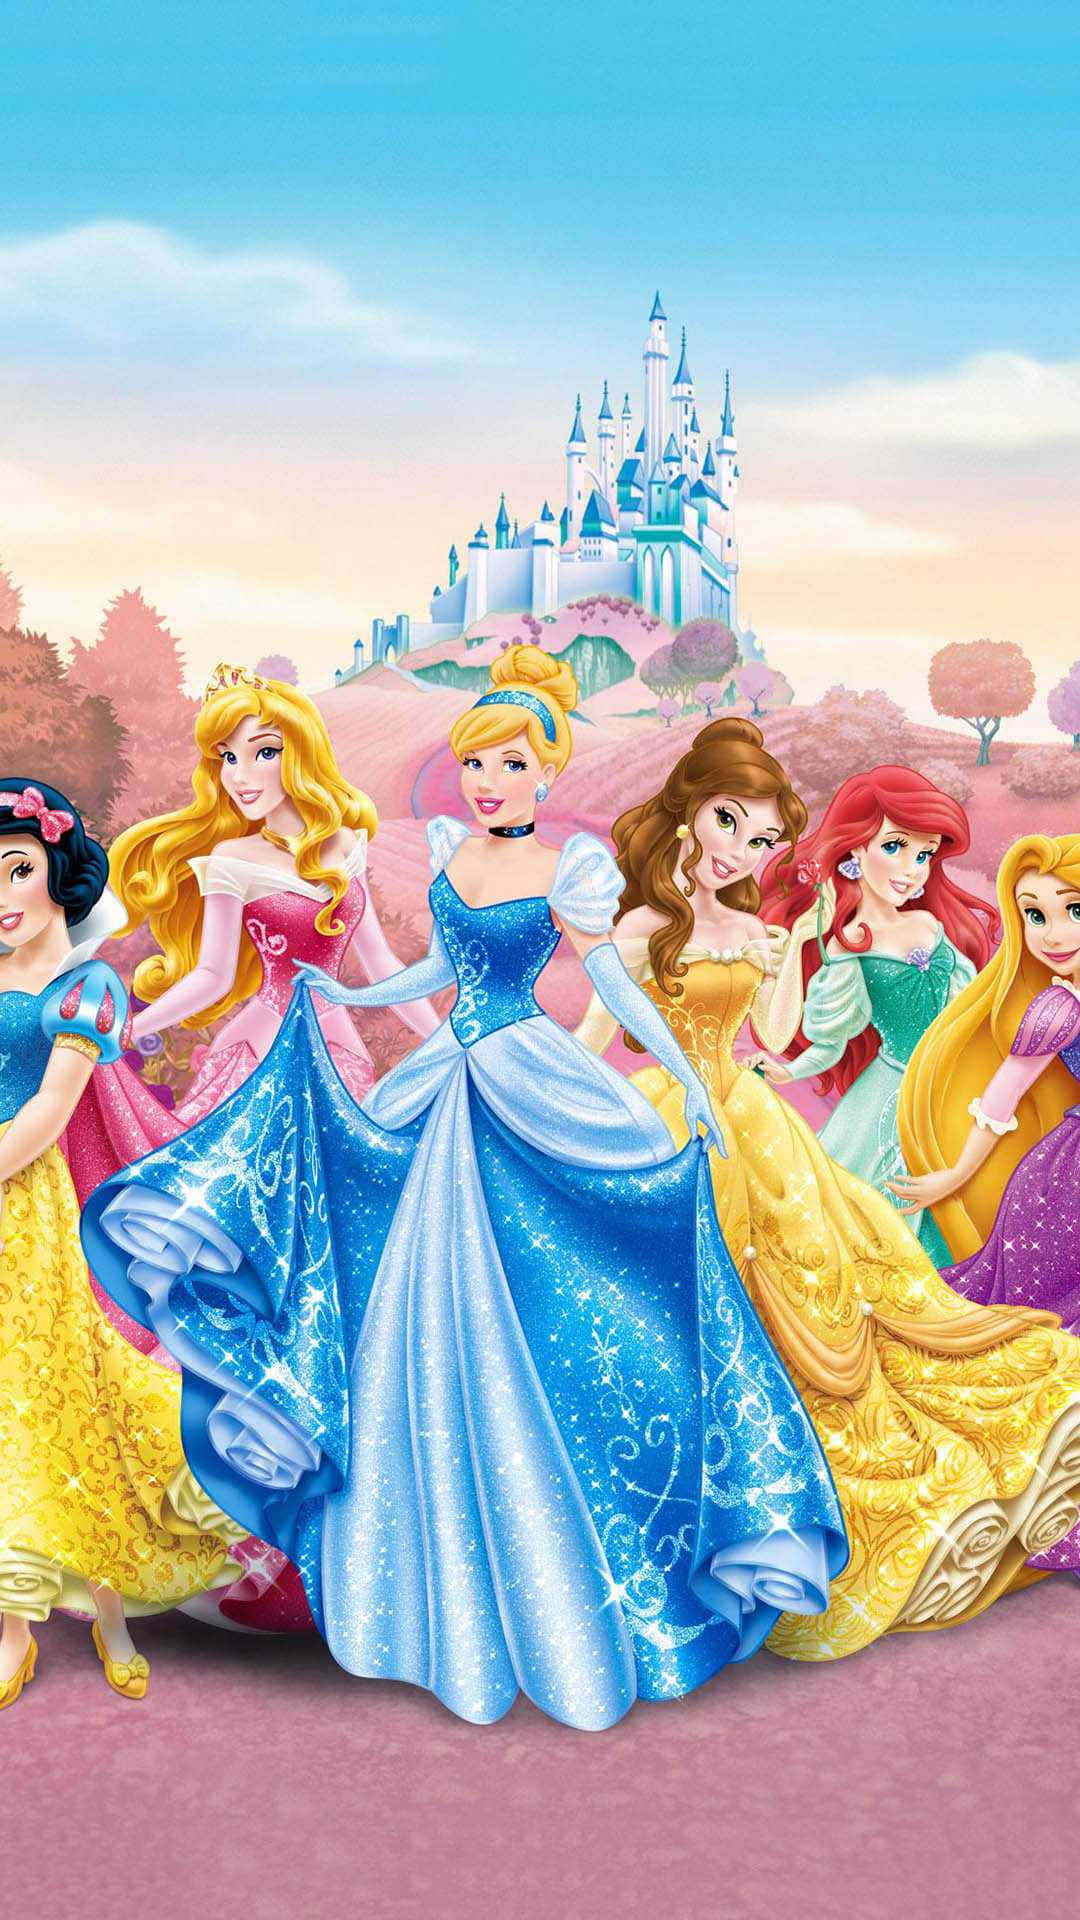 Princesses - Enchanted Castle para Android - Download